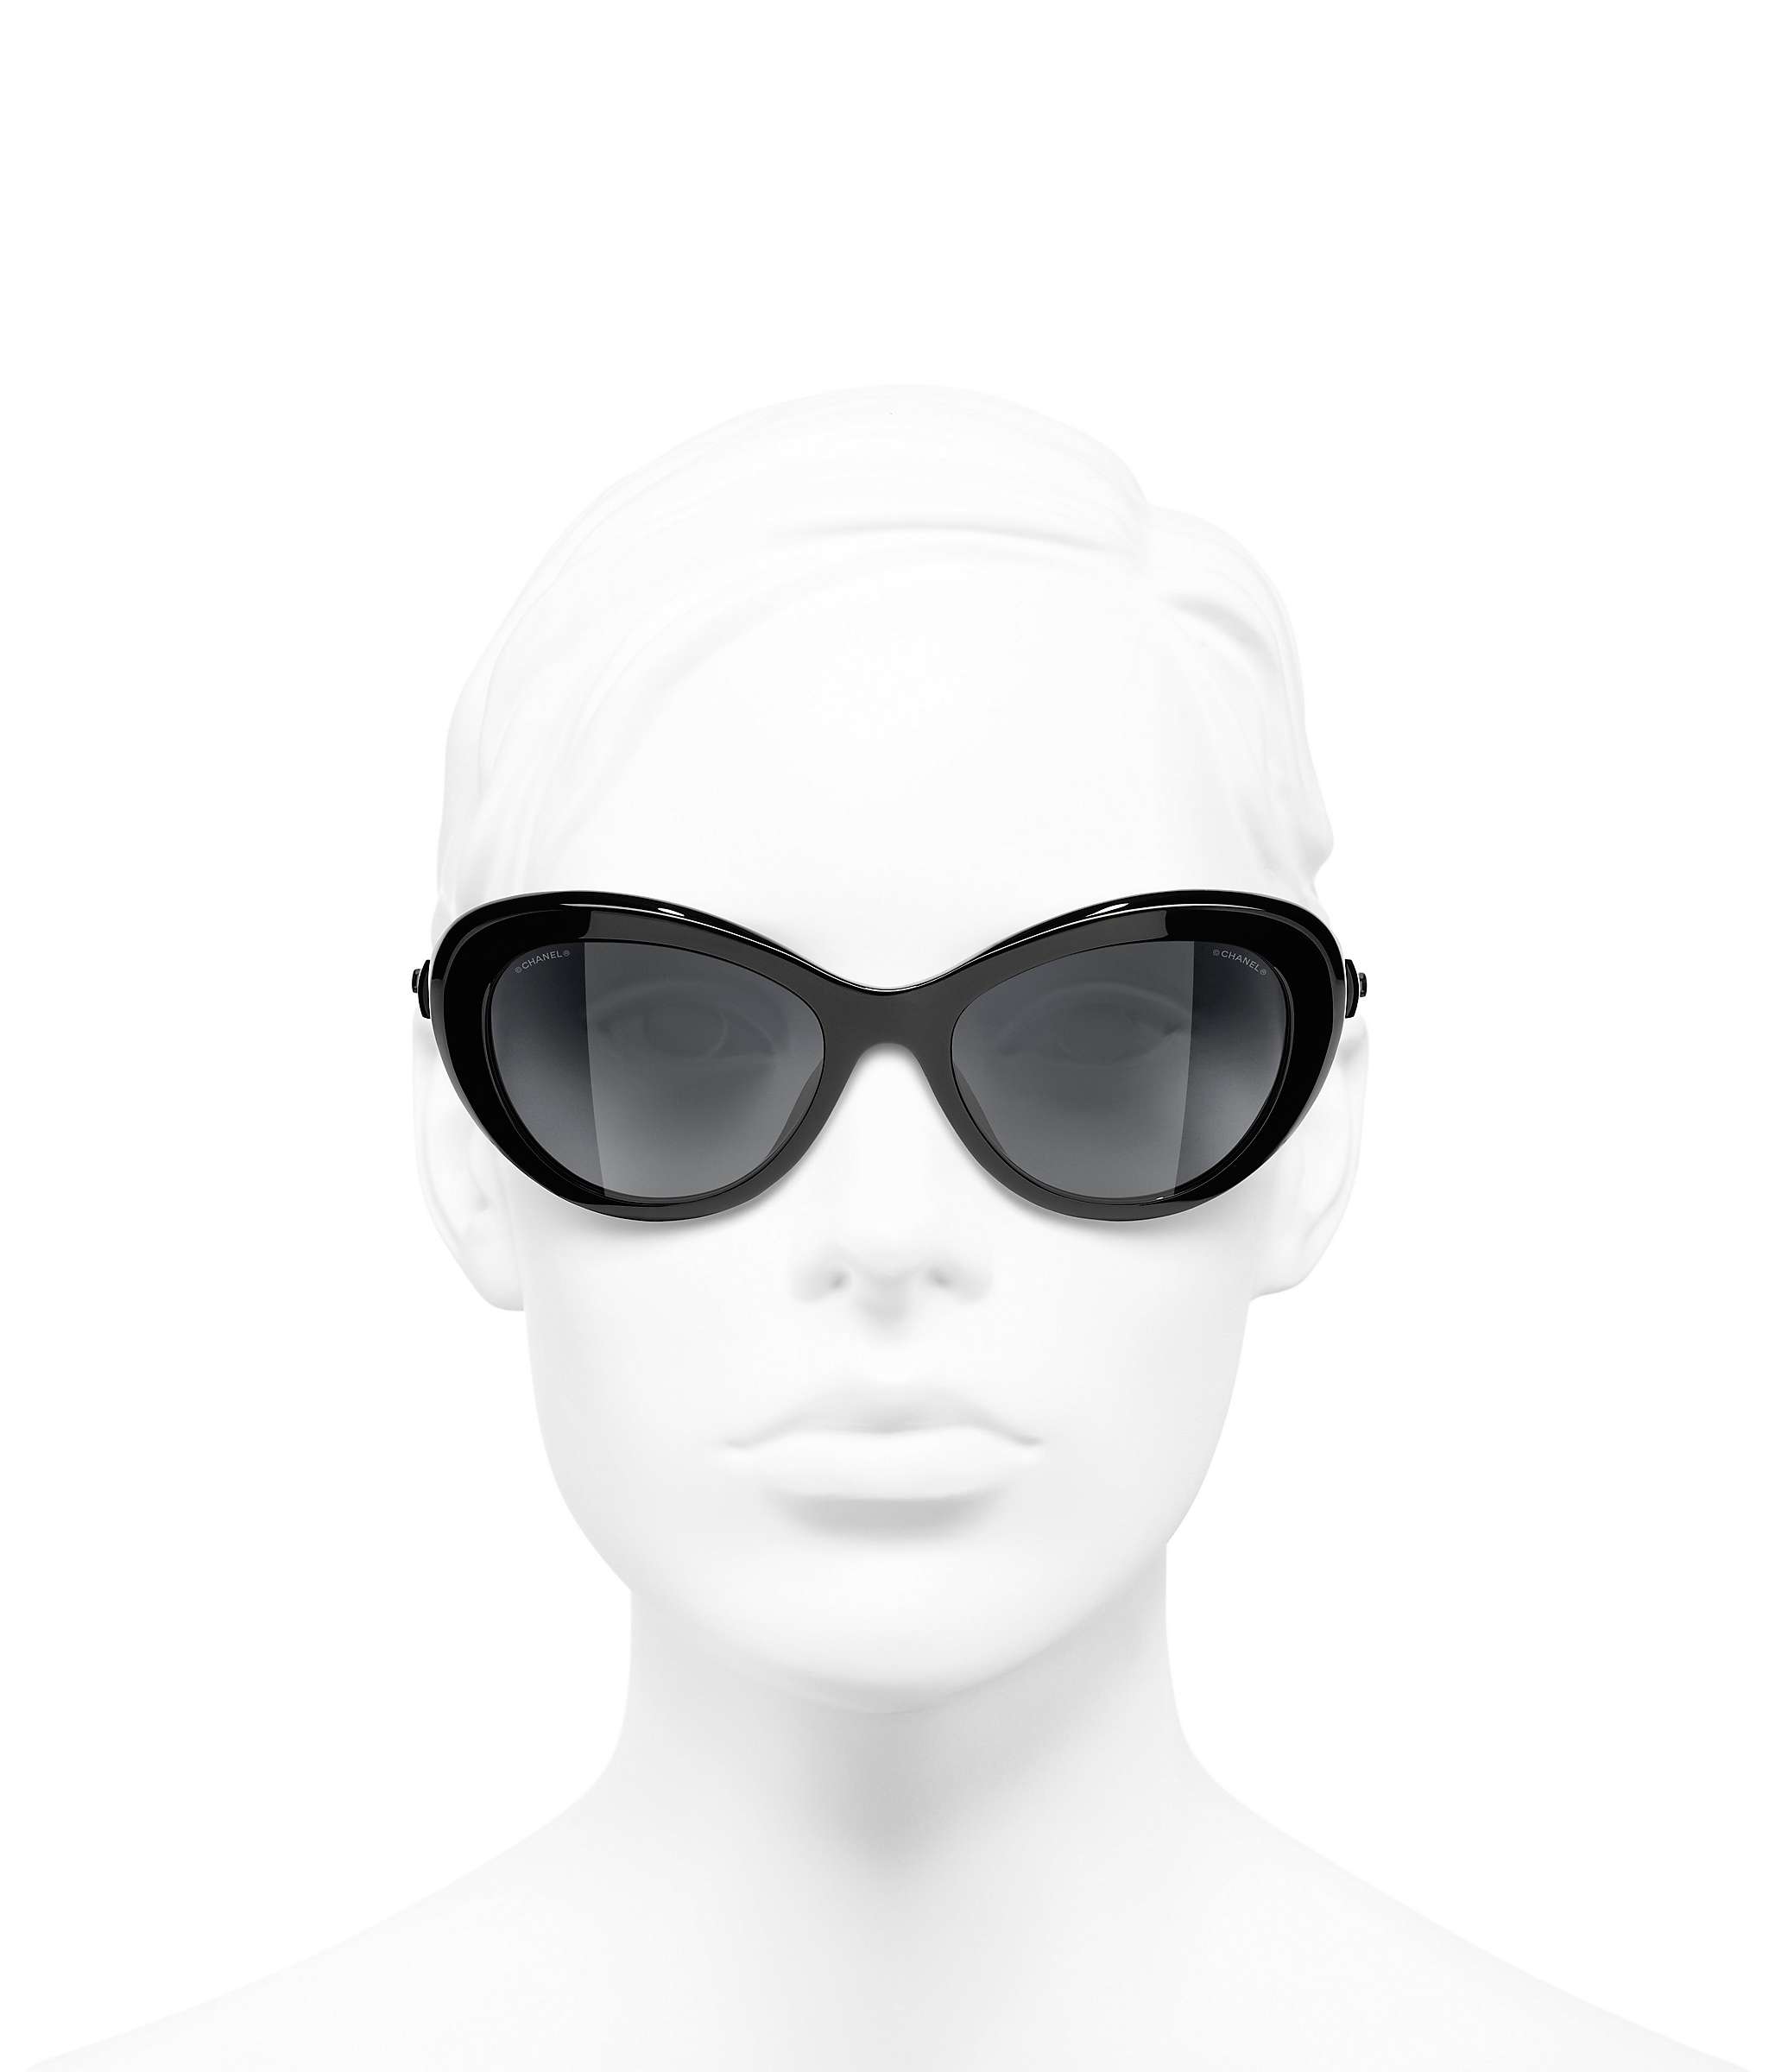 Buy CHANEL Cat Eye Sunglasses CH5443H Black Online at johnlewis.com